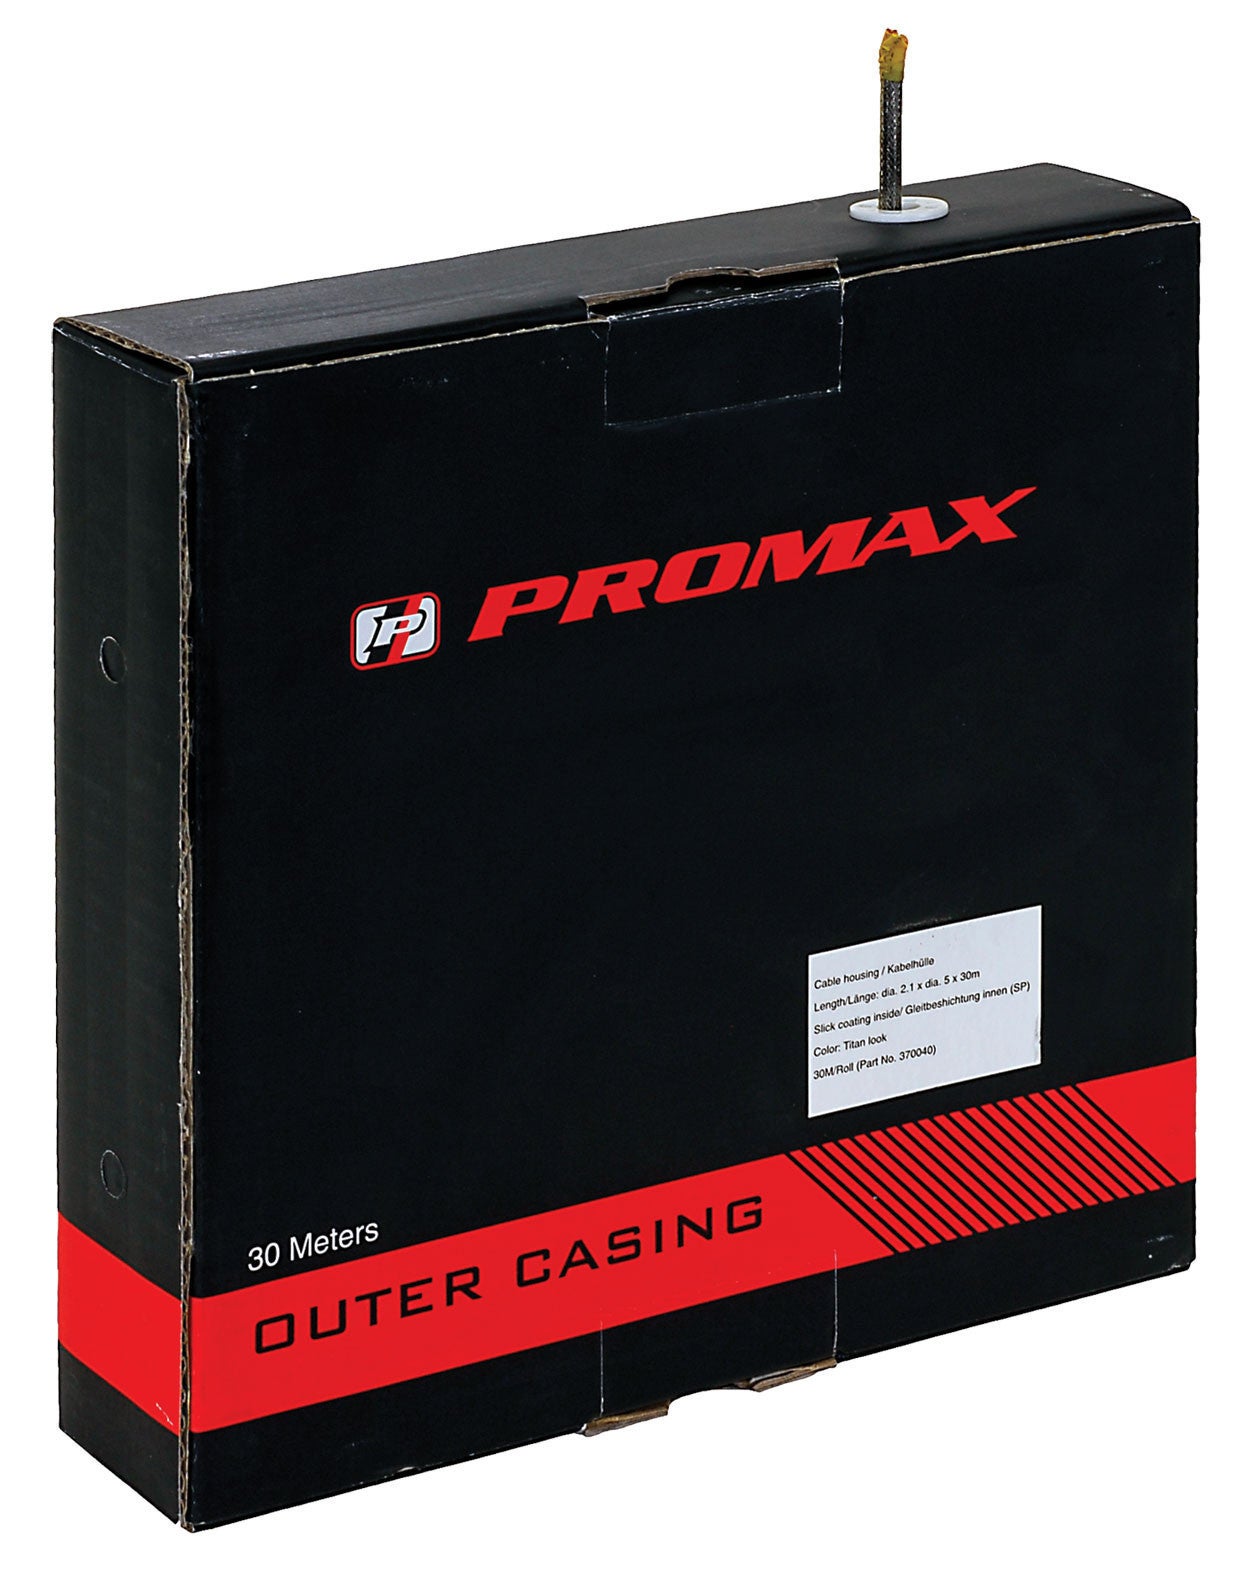  Promax Outer Casing For Derailleur Cables 